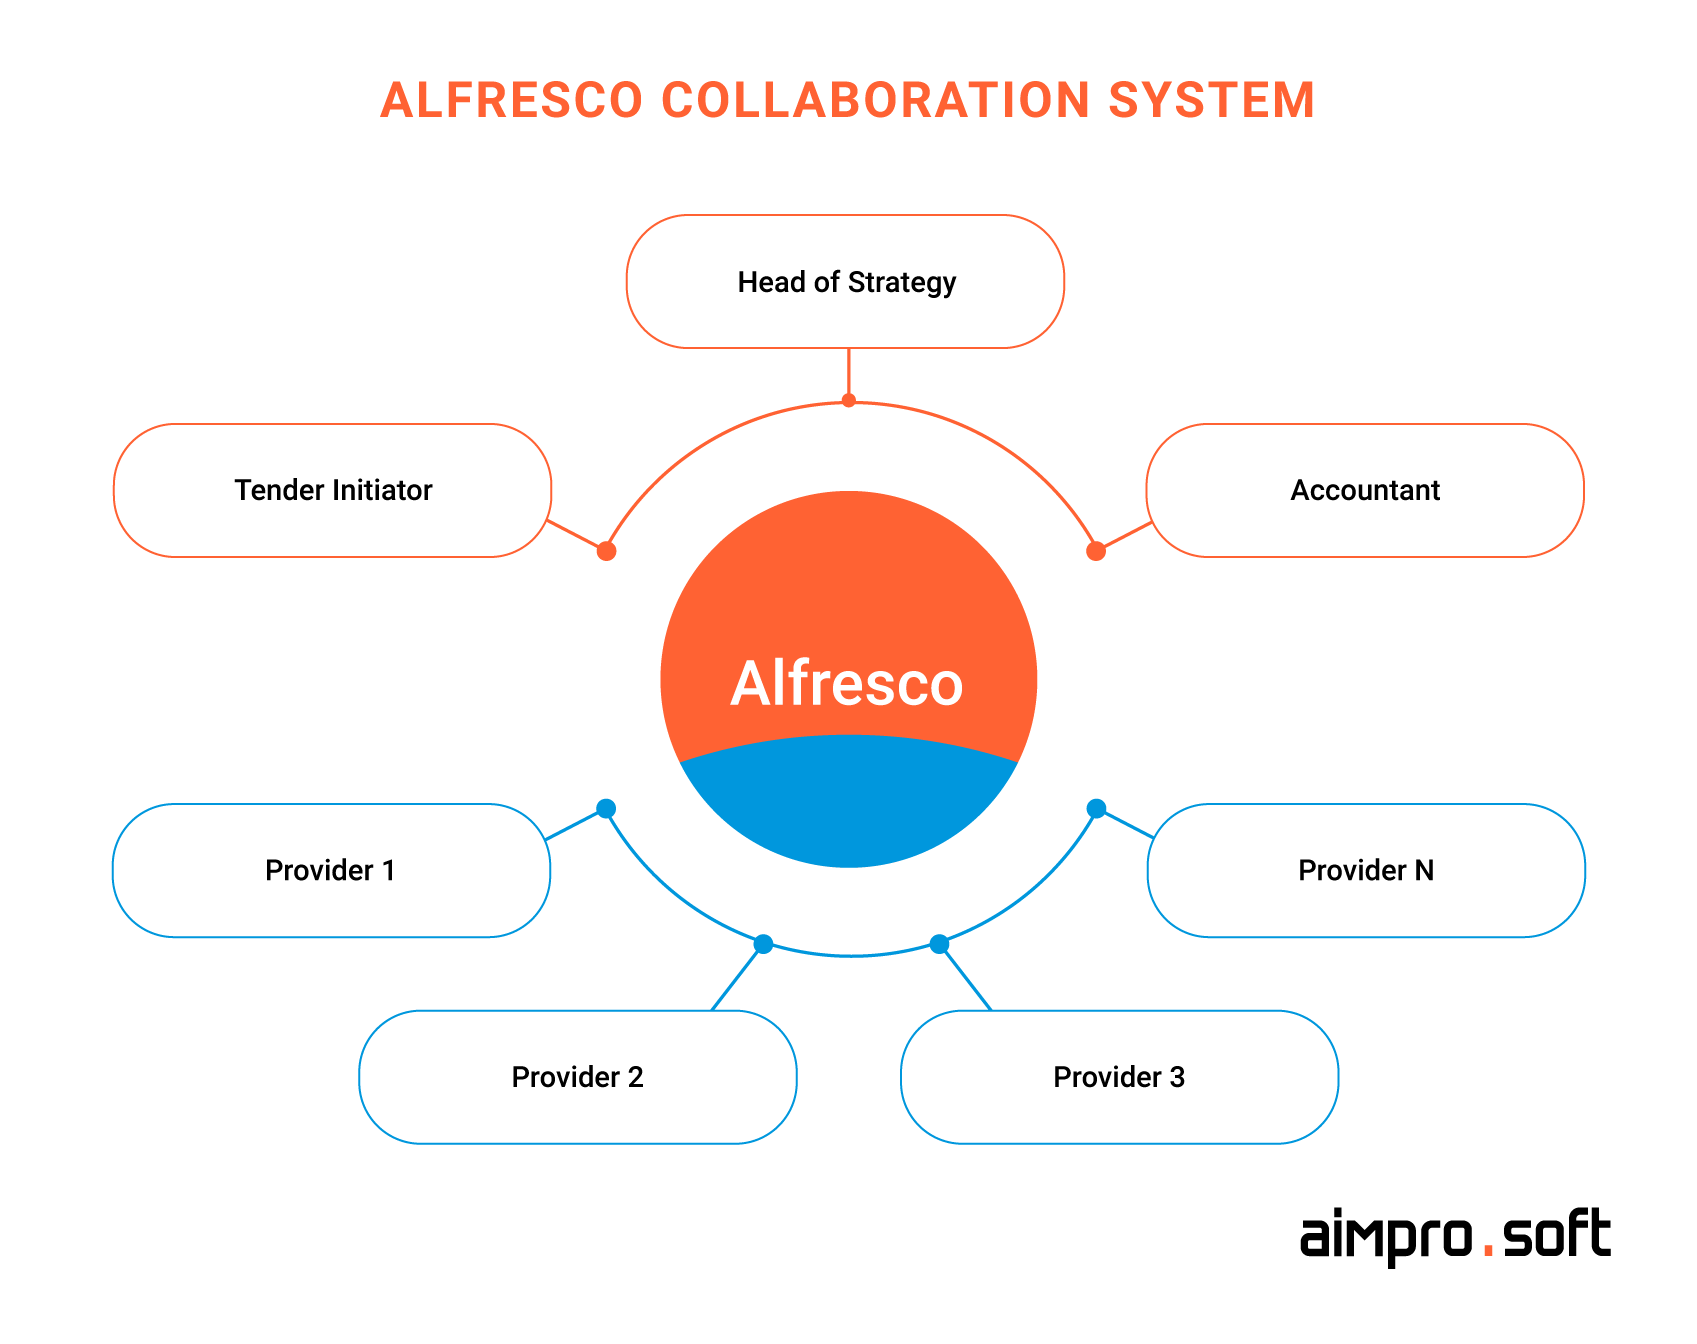  Alfresco collaboration system